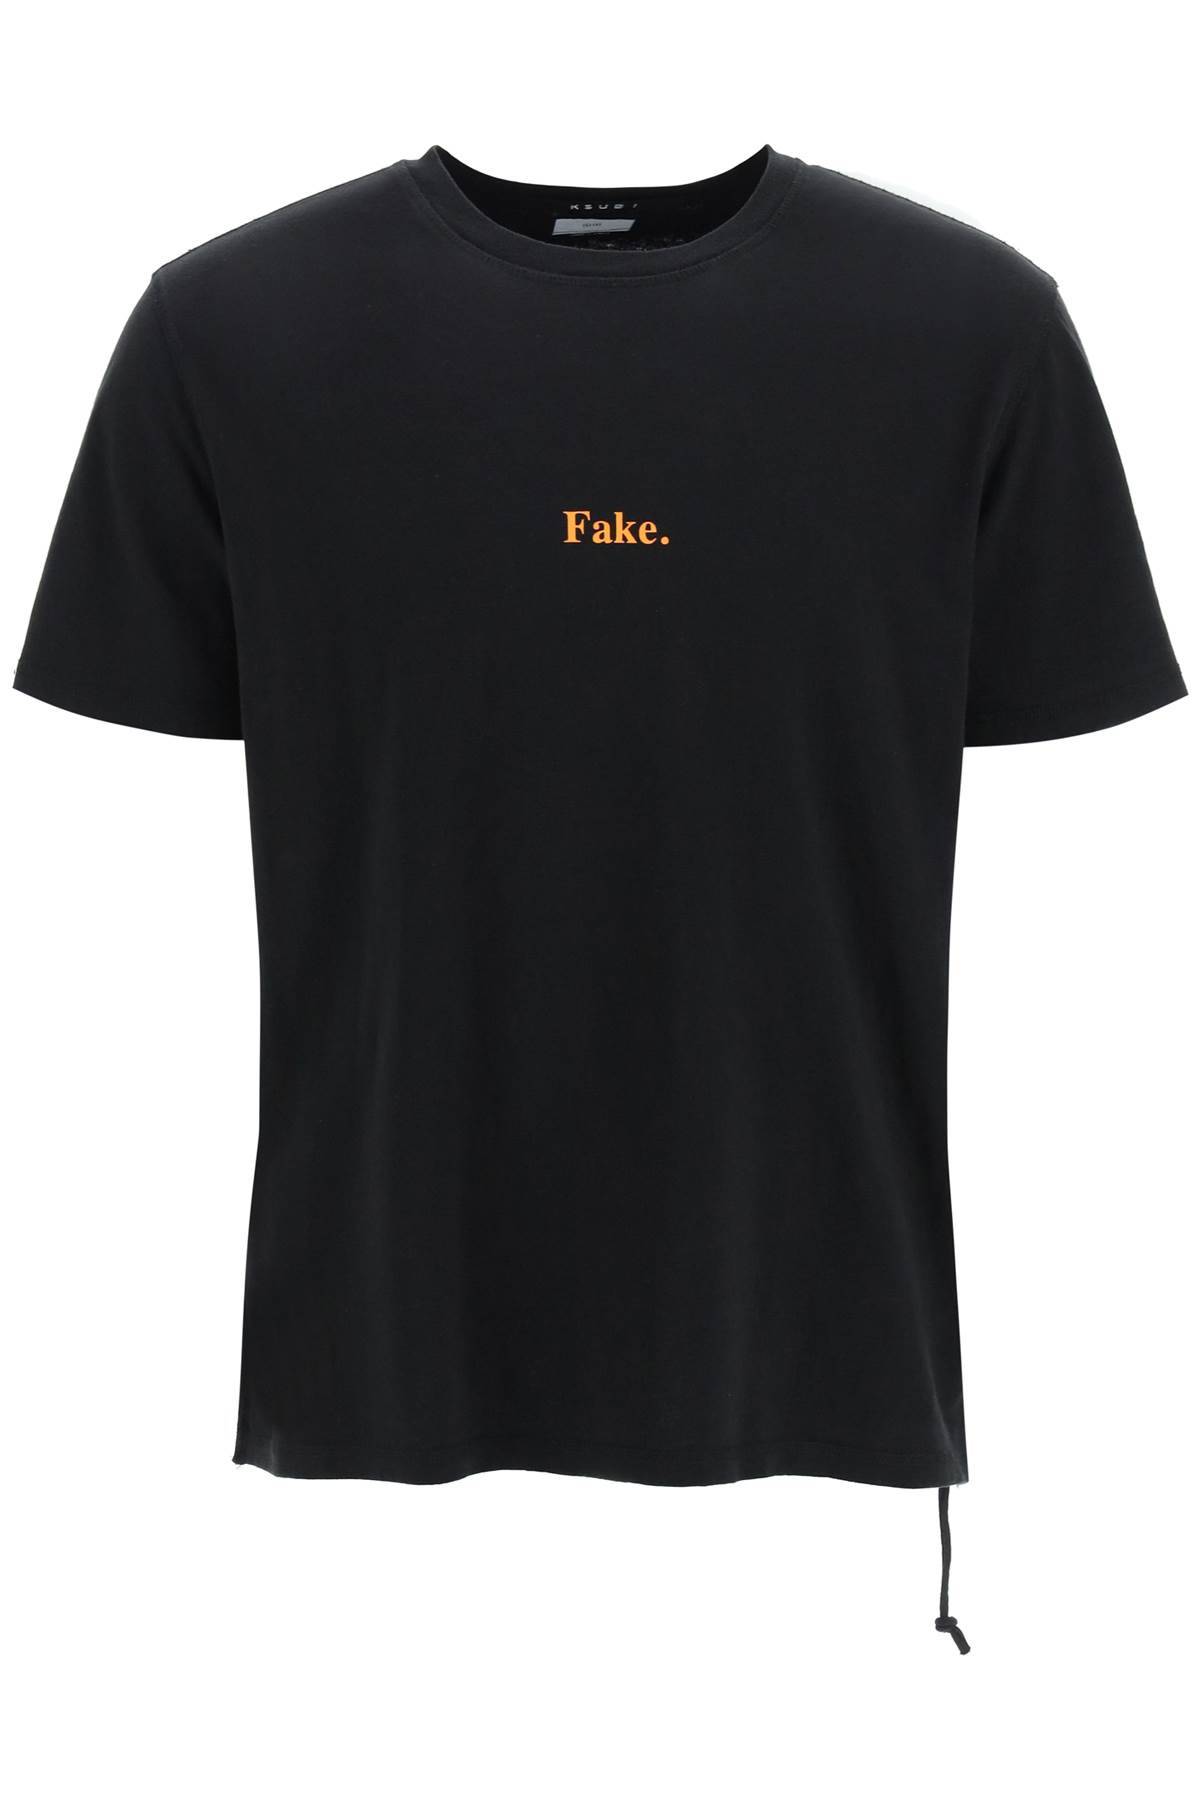 KSUBI KSUBI 'fake' t-shirt